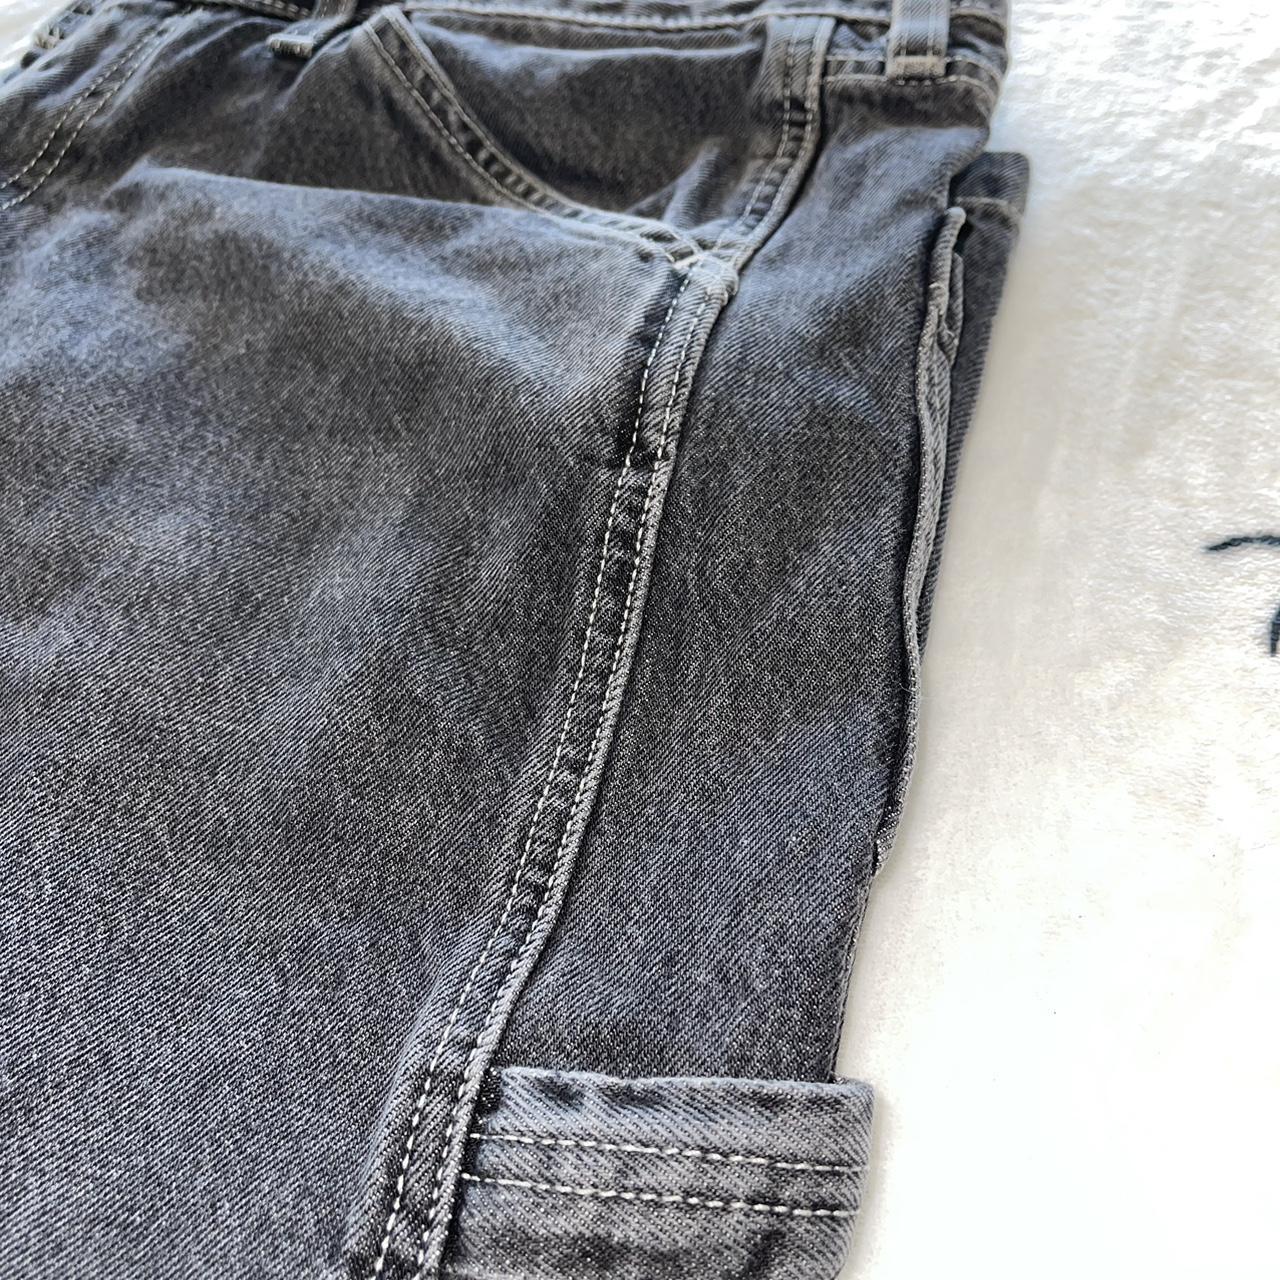 Levi’s Black Cotton Jeans 7 pockets lightly worn - Depop